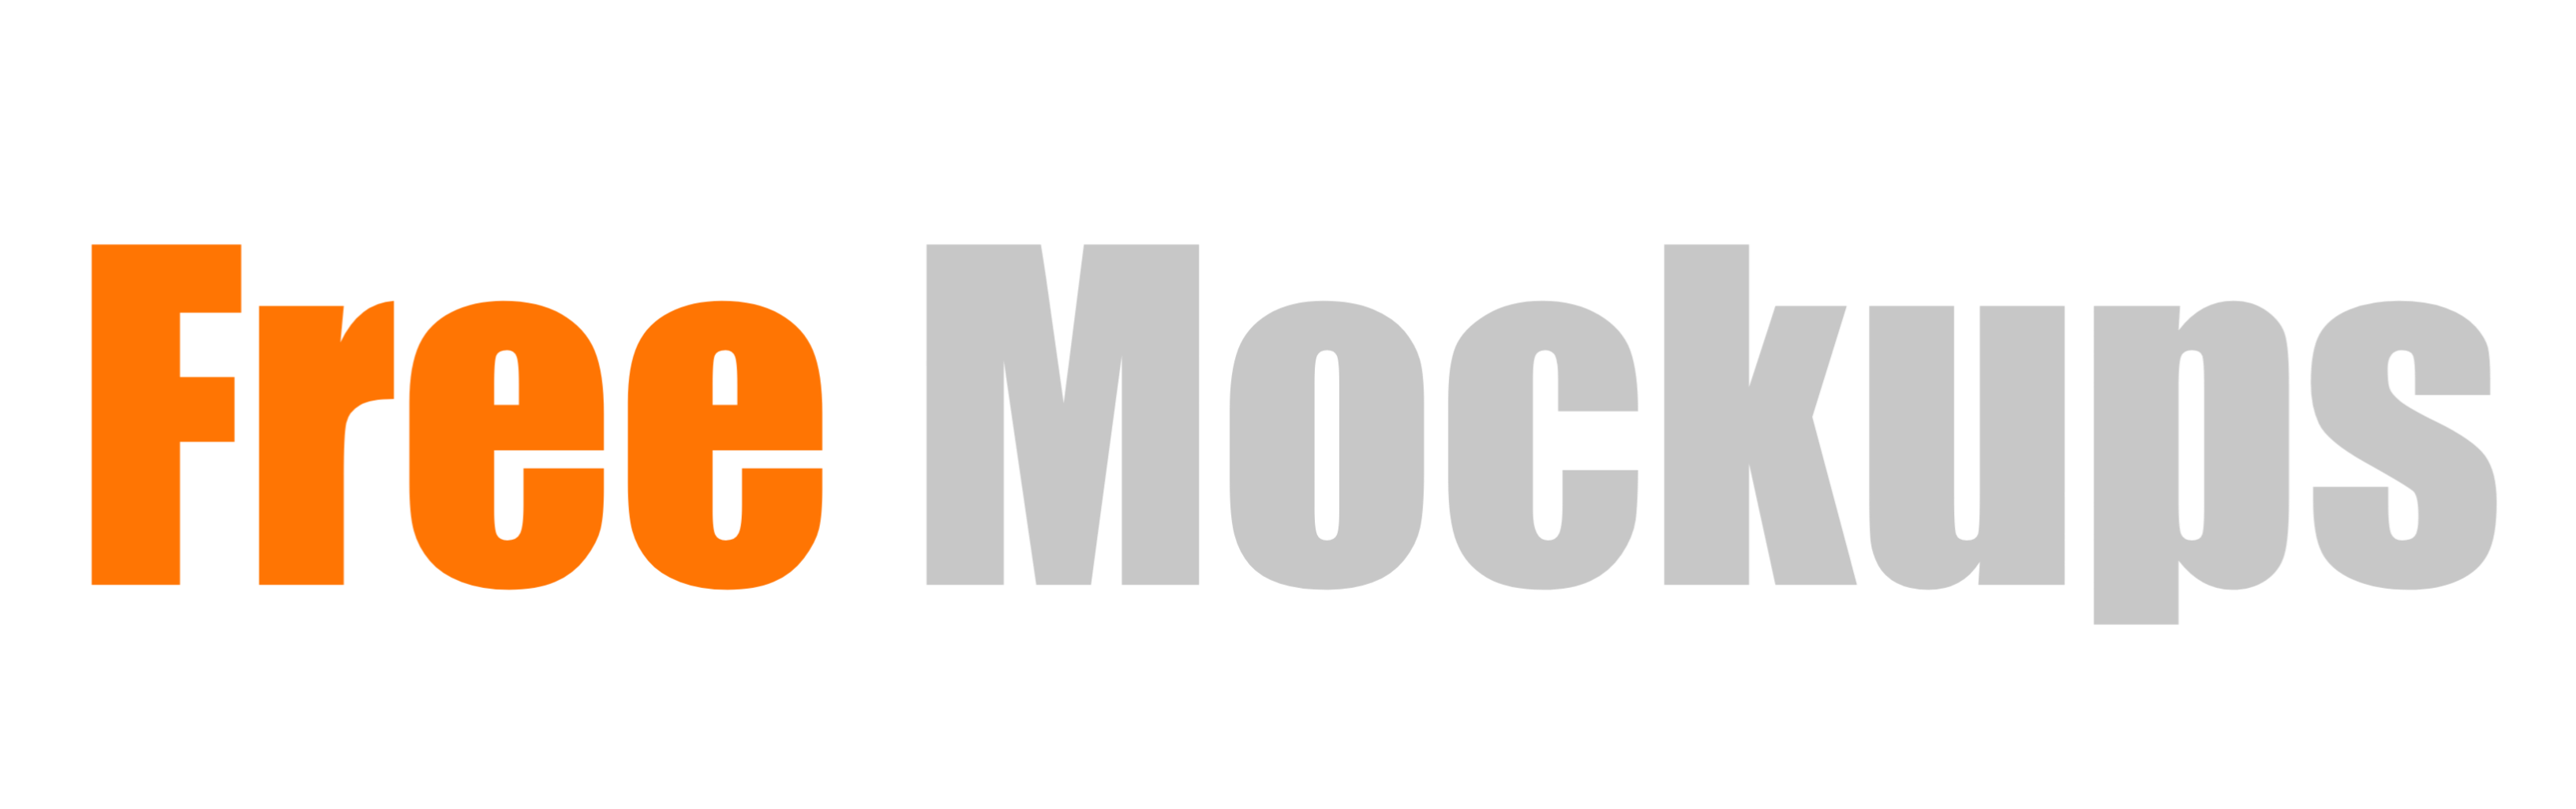 Free Mockups | Template Download